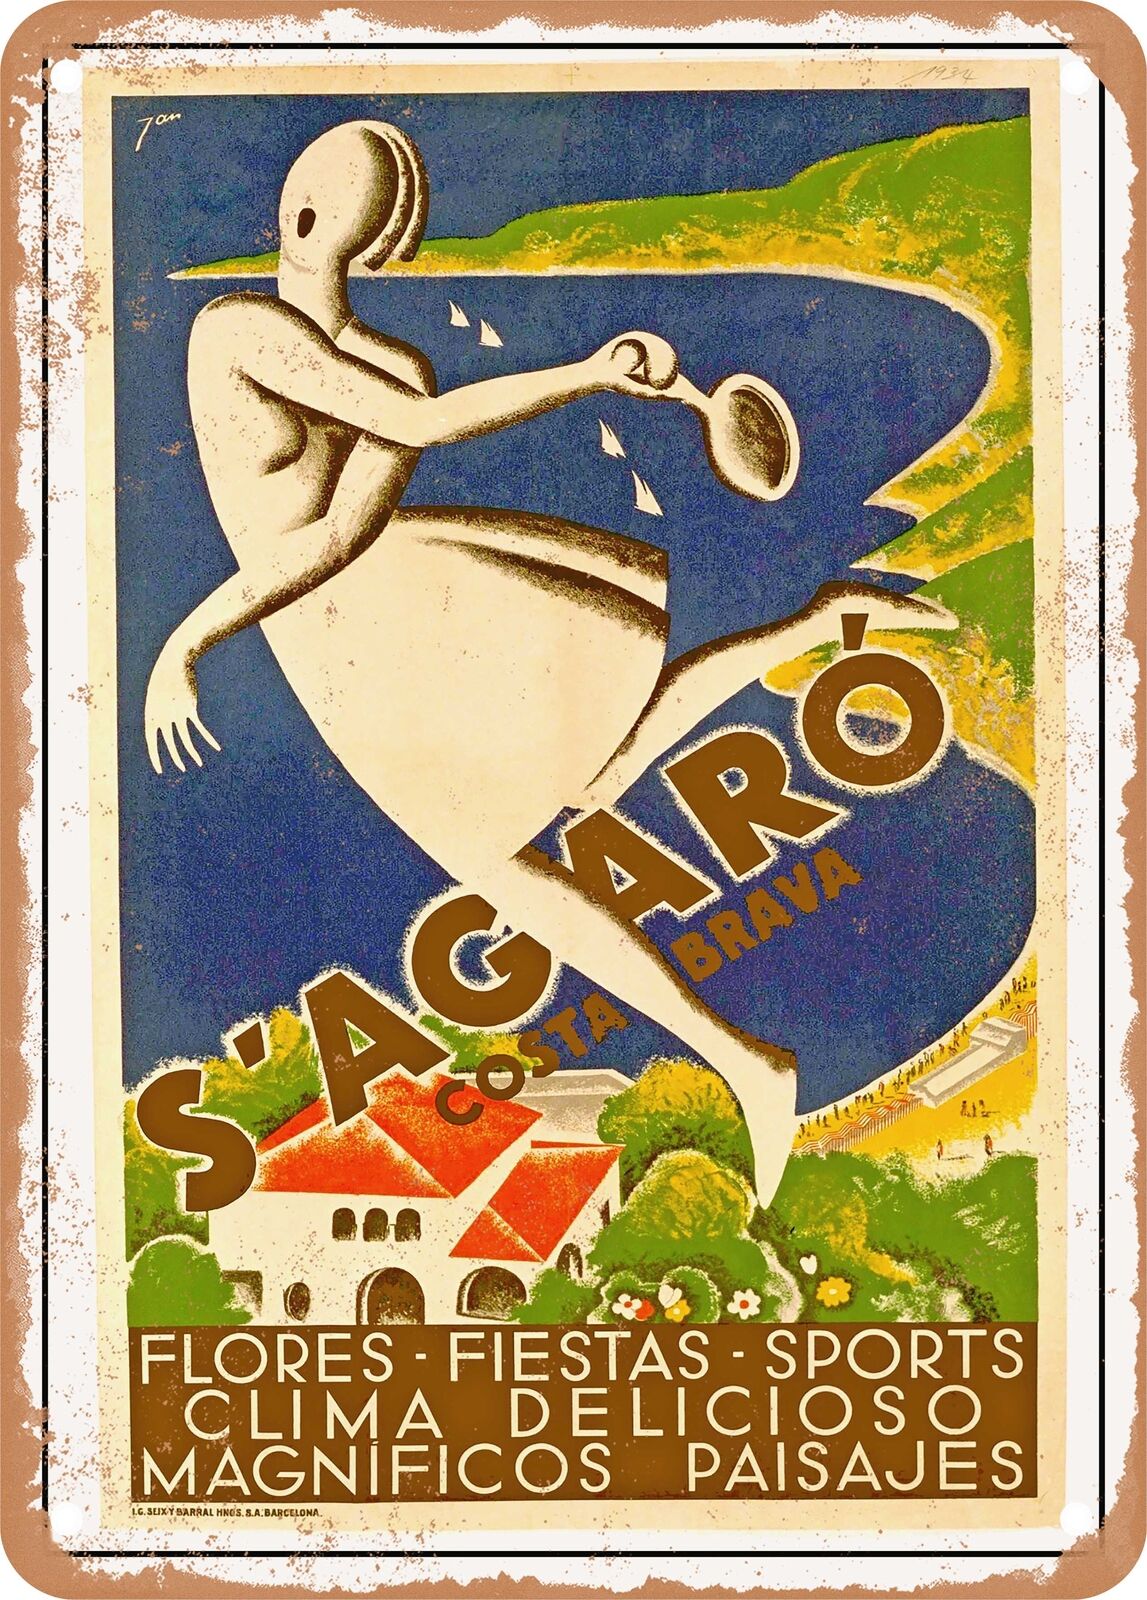 METAL SIGN - 1934 S\'Agaro, Costa Brava, Flowers, Festivities, Sports Vintage Ad